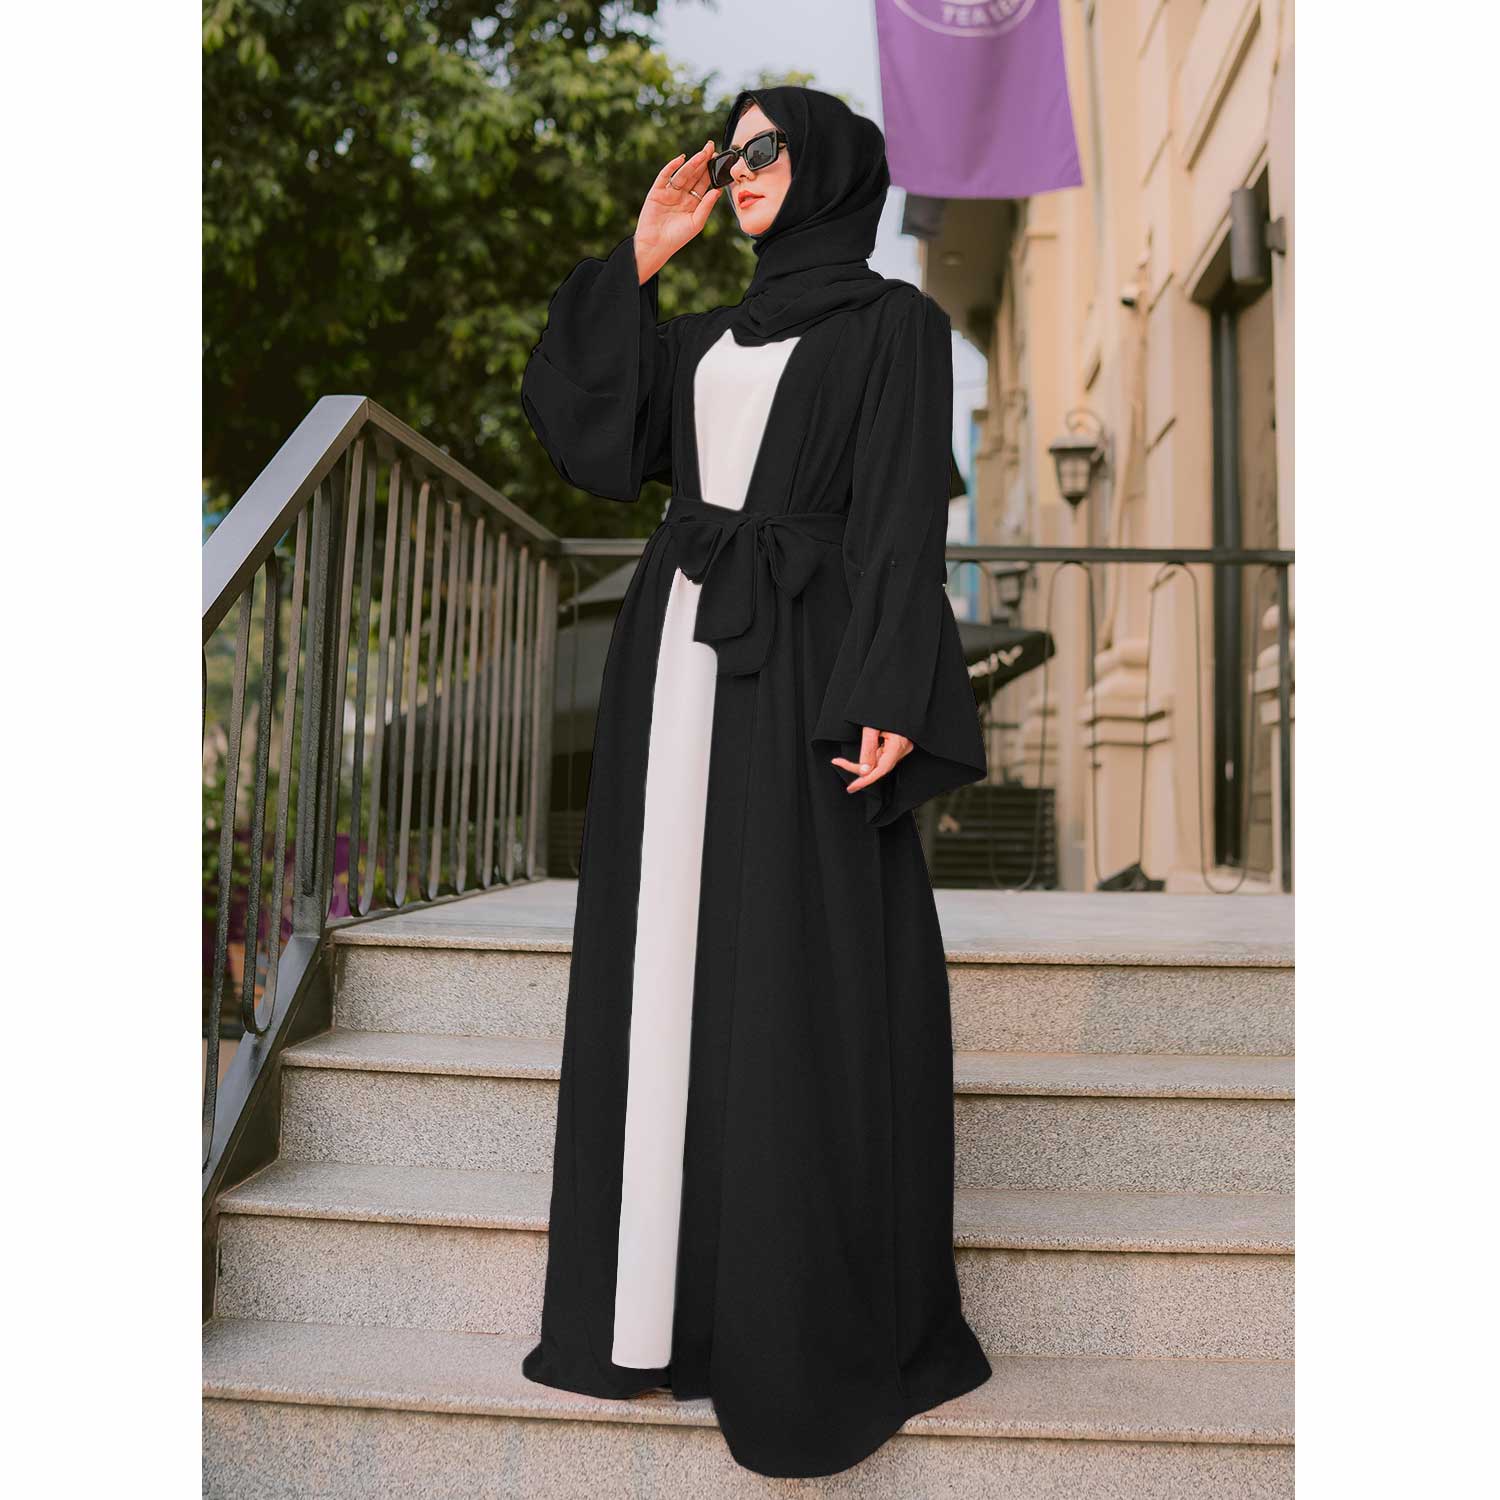 Puff Sleeves Front Open Abaya (Black) Online in Pakistan – Astore®